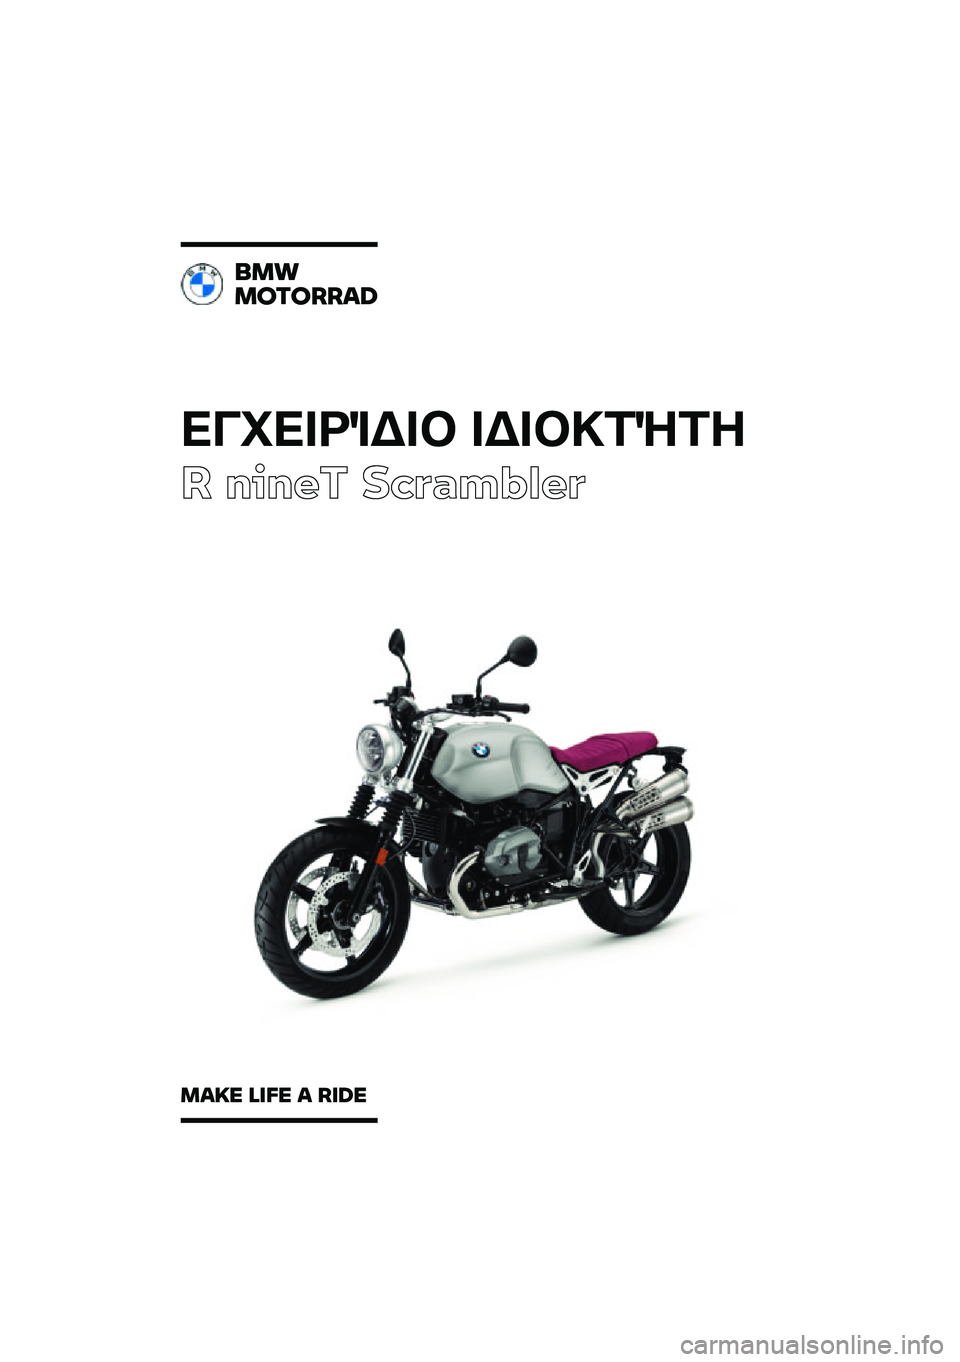 BMW MOTORRAD R NINE T SCRAMBLER 2021  Εγχειρίδιο ιδιοκτήτη (in Greek) ��������\b��	 ��\b��	�
��\f��
� ����� ��\b�	�
��\f�
��	
���
�������\b�	
��\b�
� �\f�
�� �\b ��
�	� 